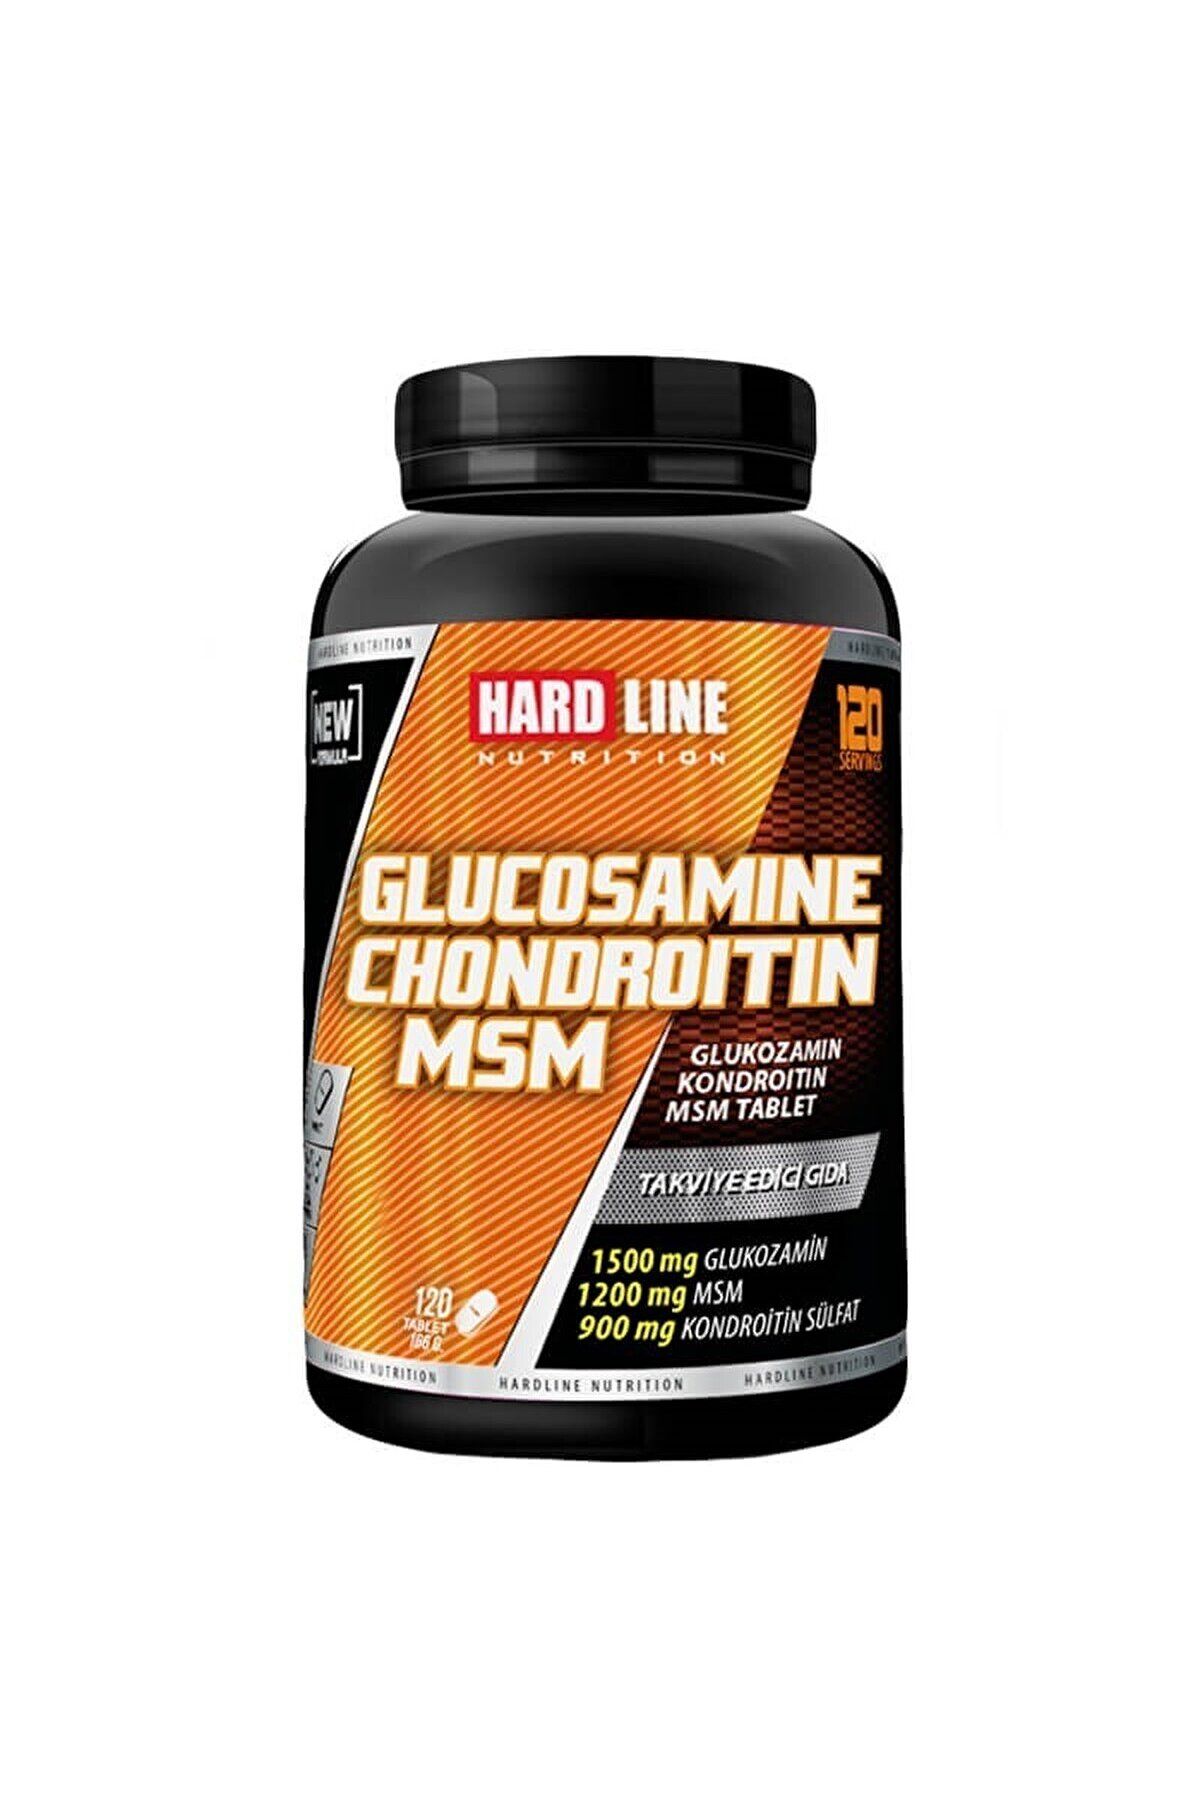 Hardline Glucosamine Chondroitin Msm 120 Tablet